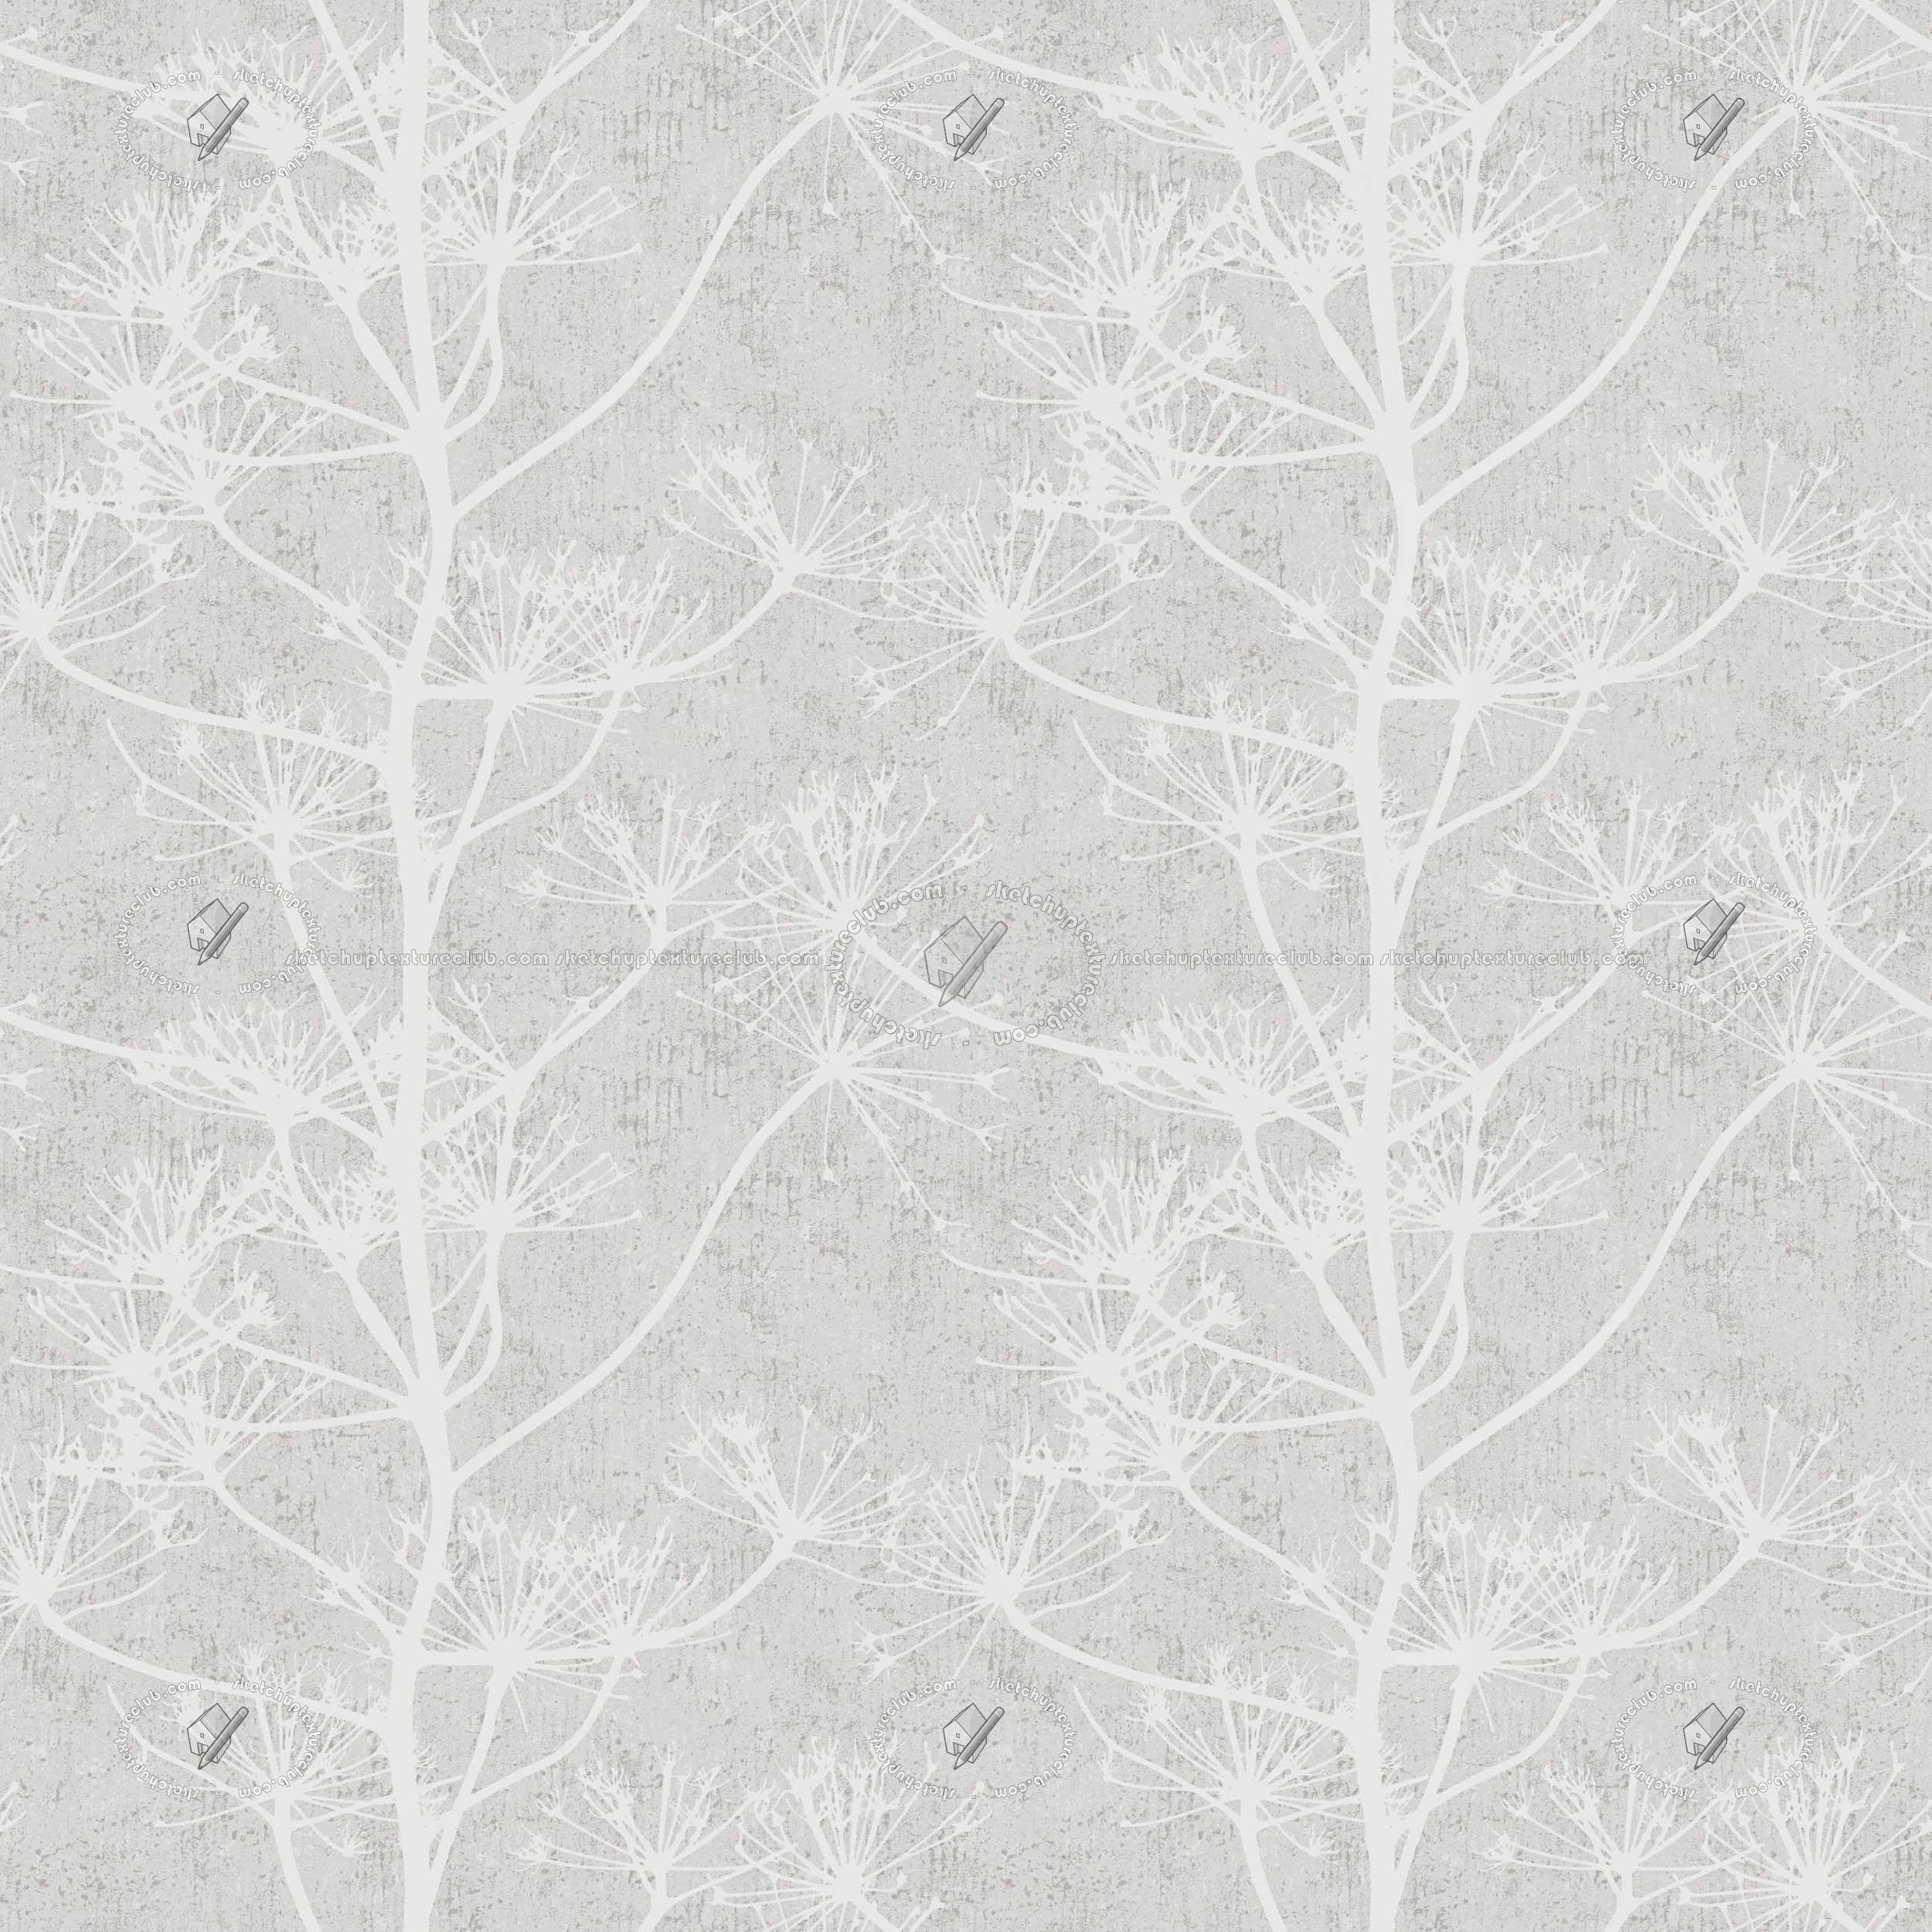 Tileable Wallpaper Texture Ideas - Image to u